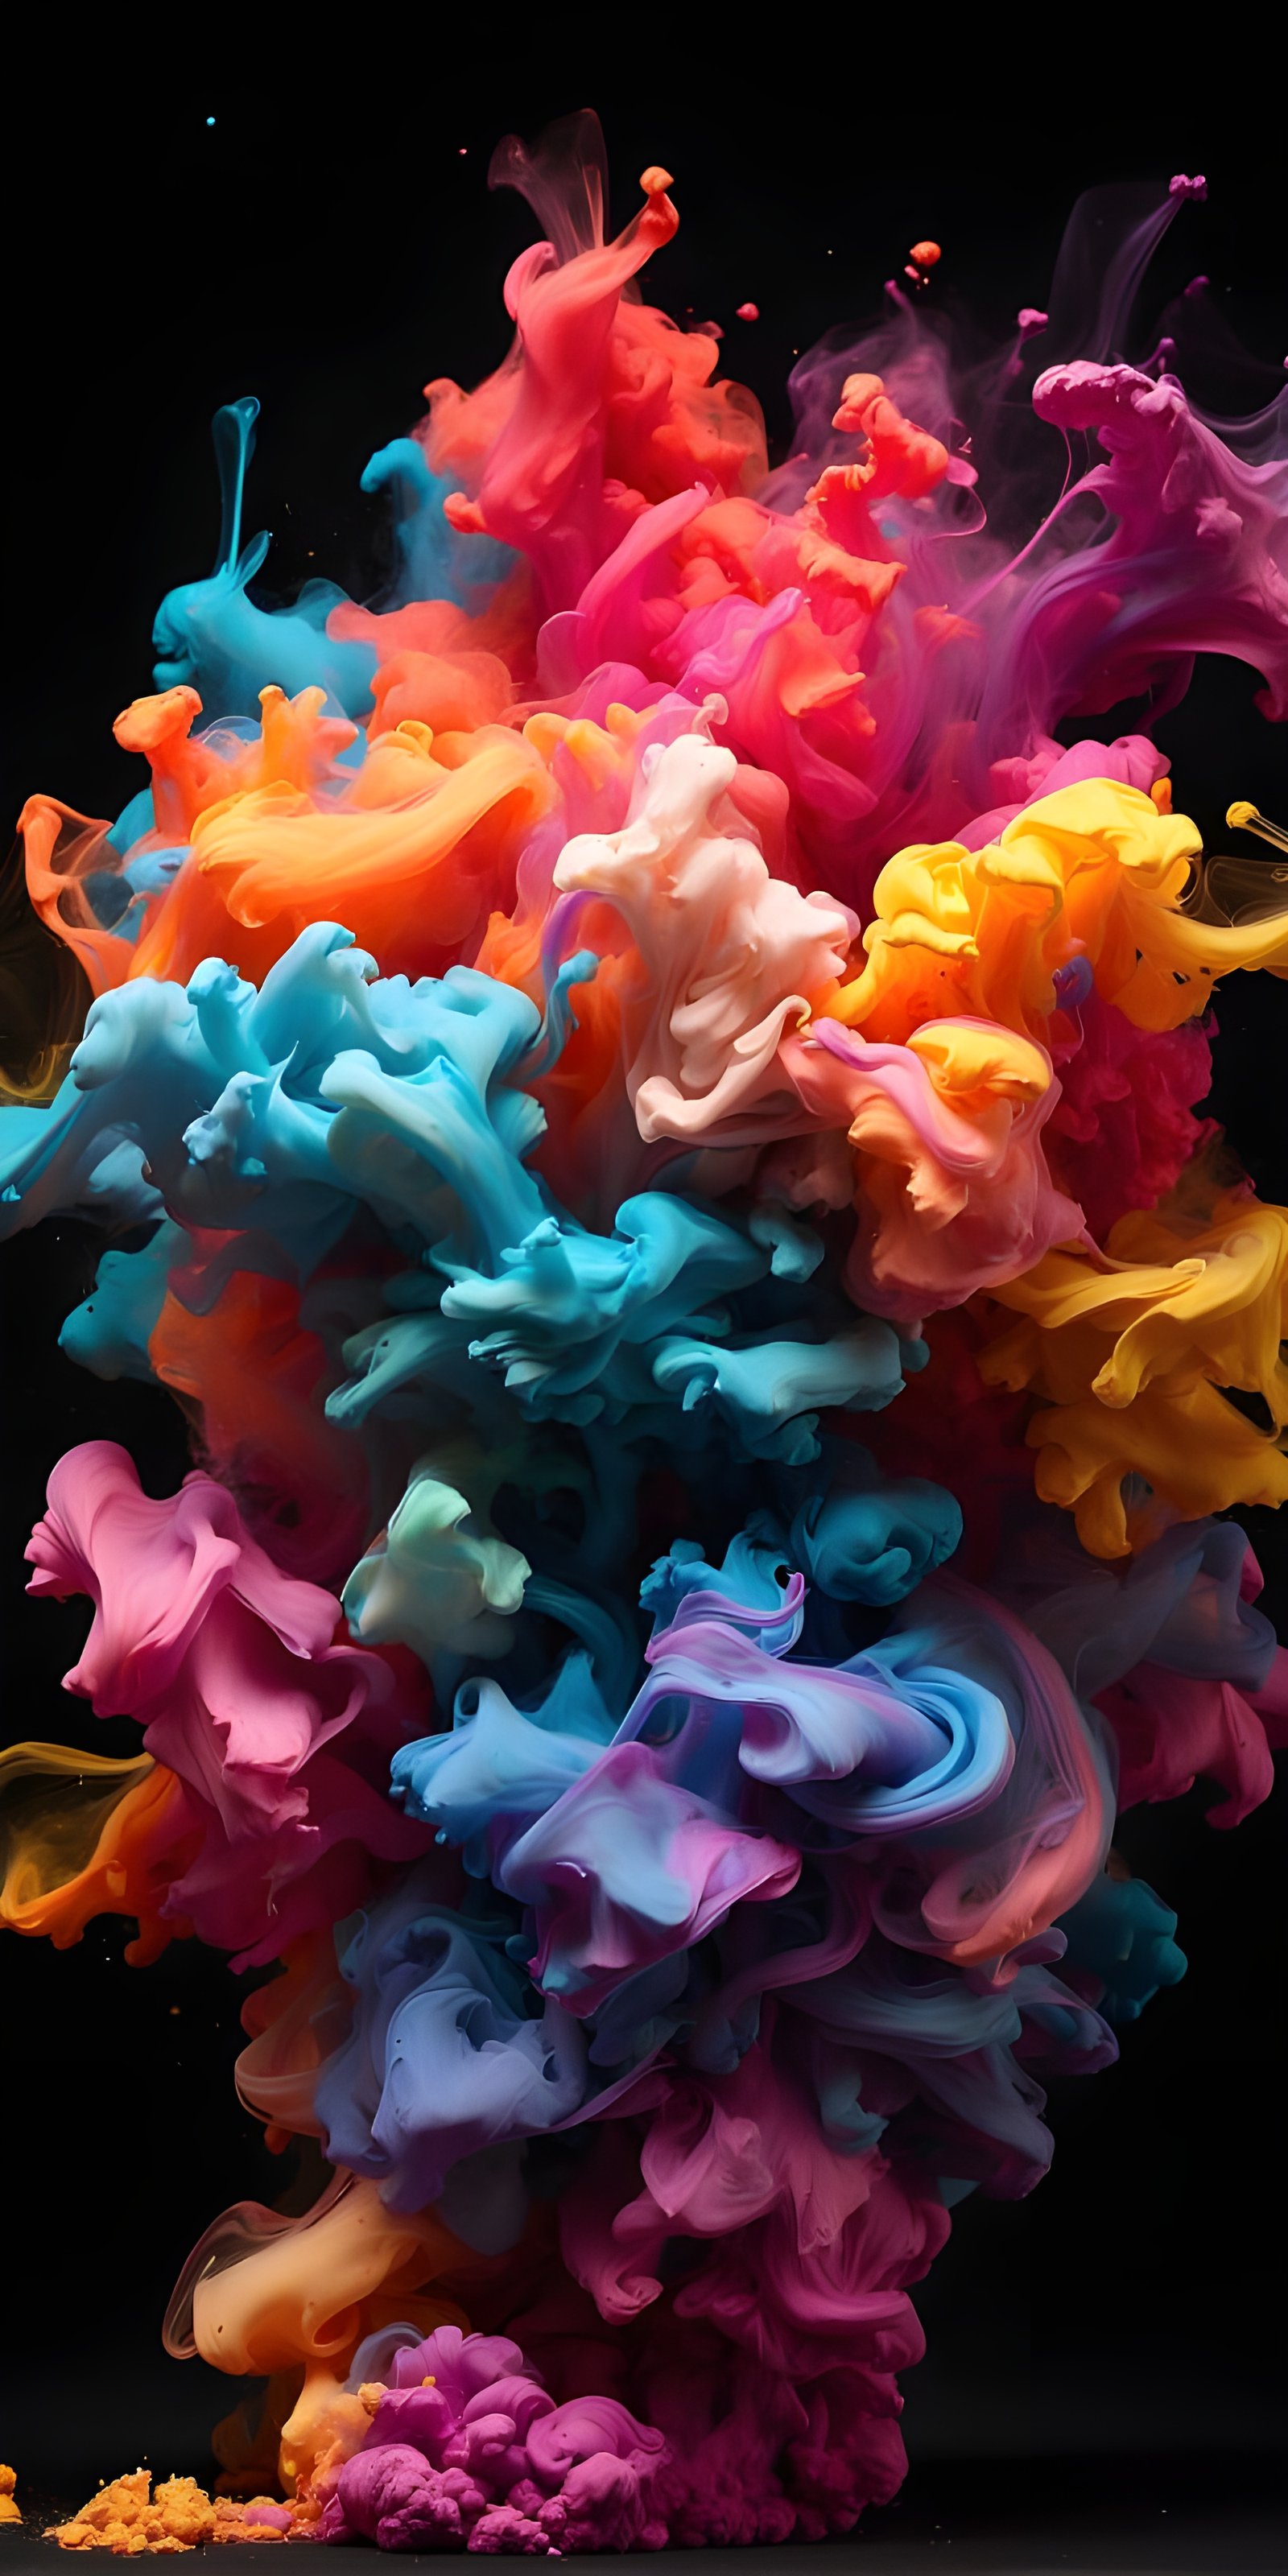 AMOLED Vibrant Abstract Phone Wallpaper, Colorful Smoke